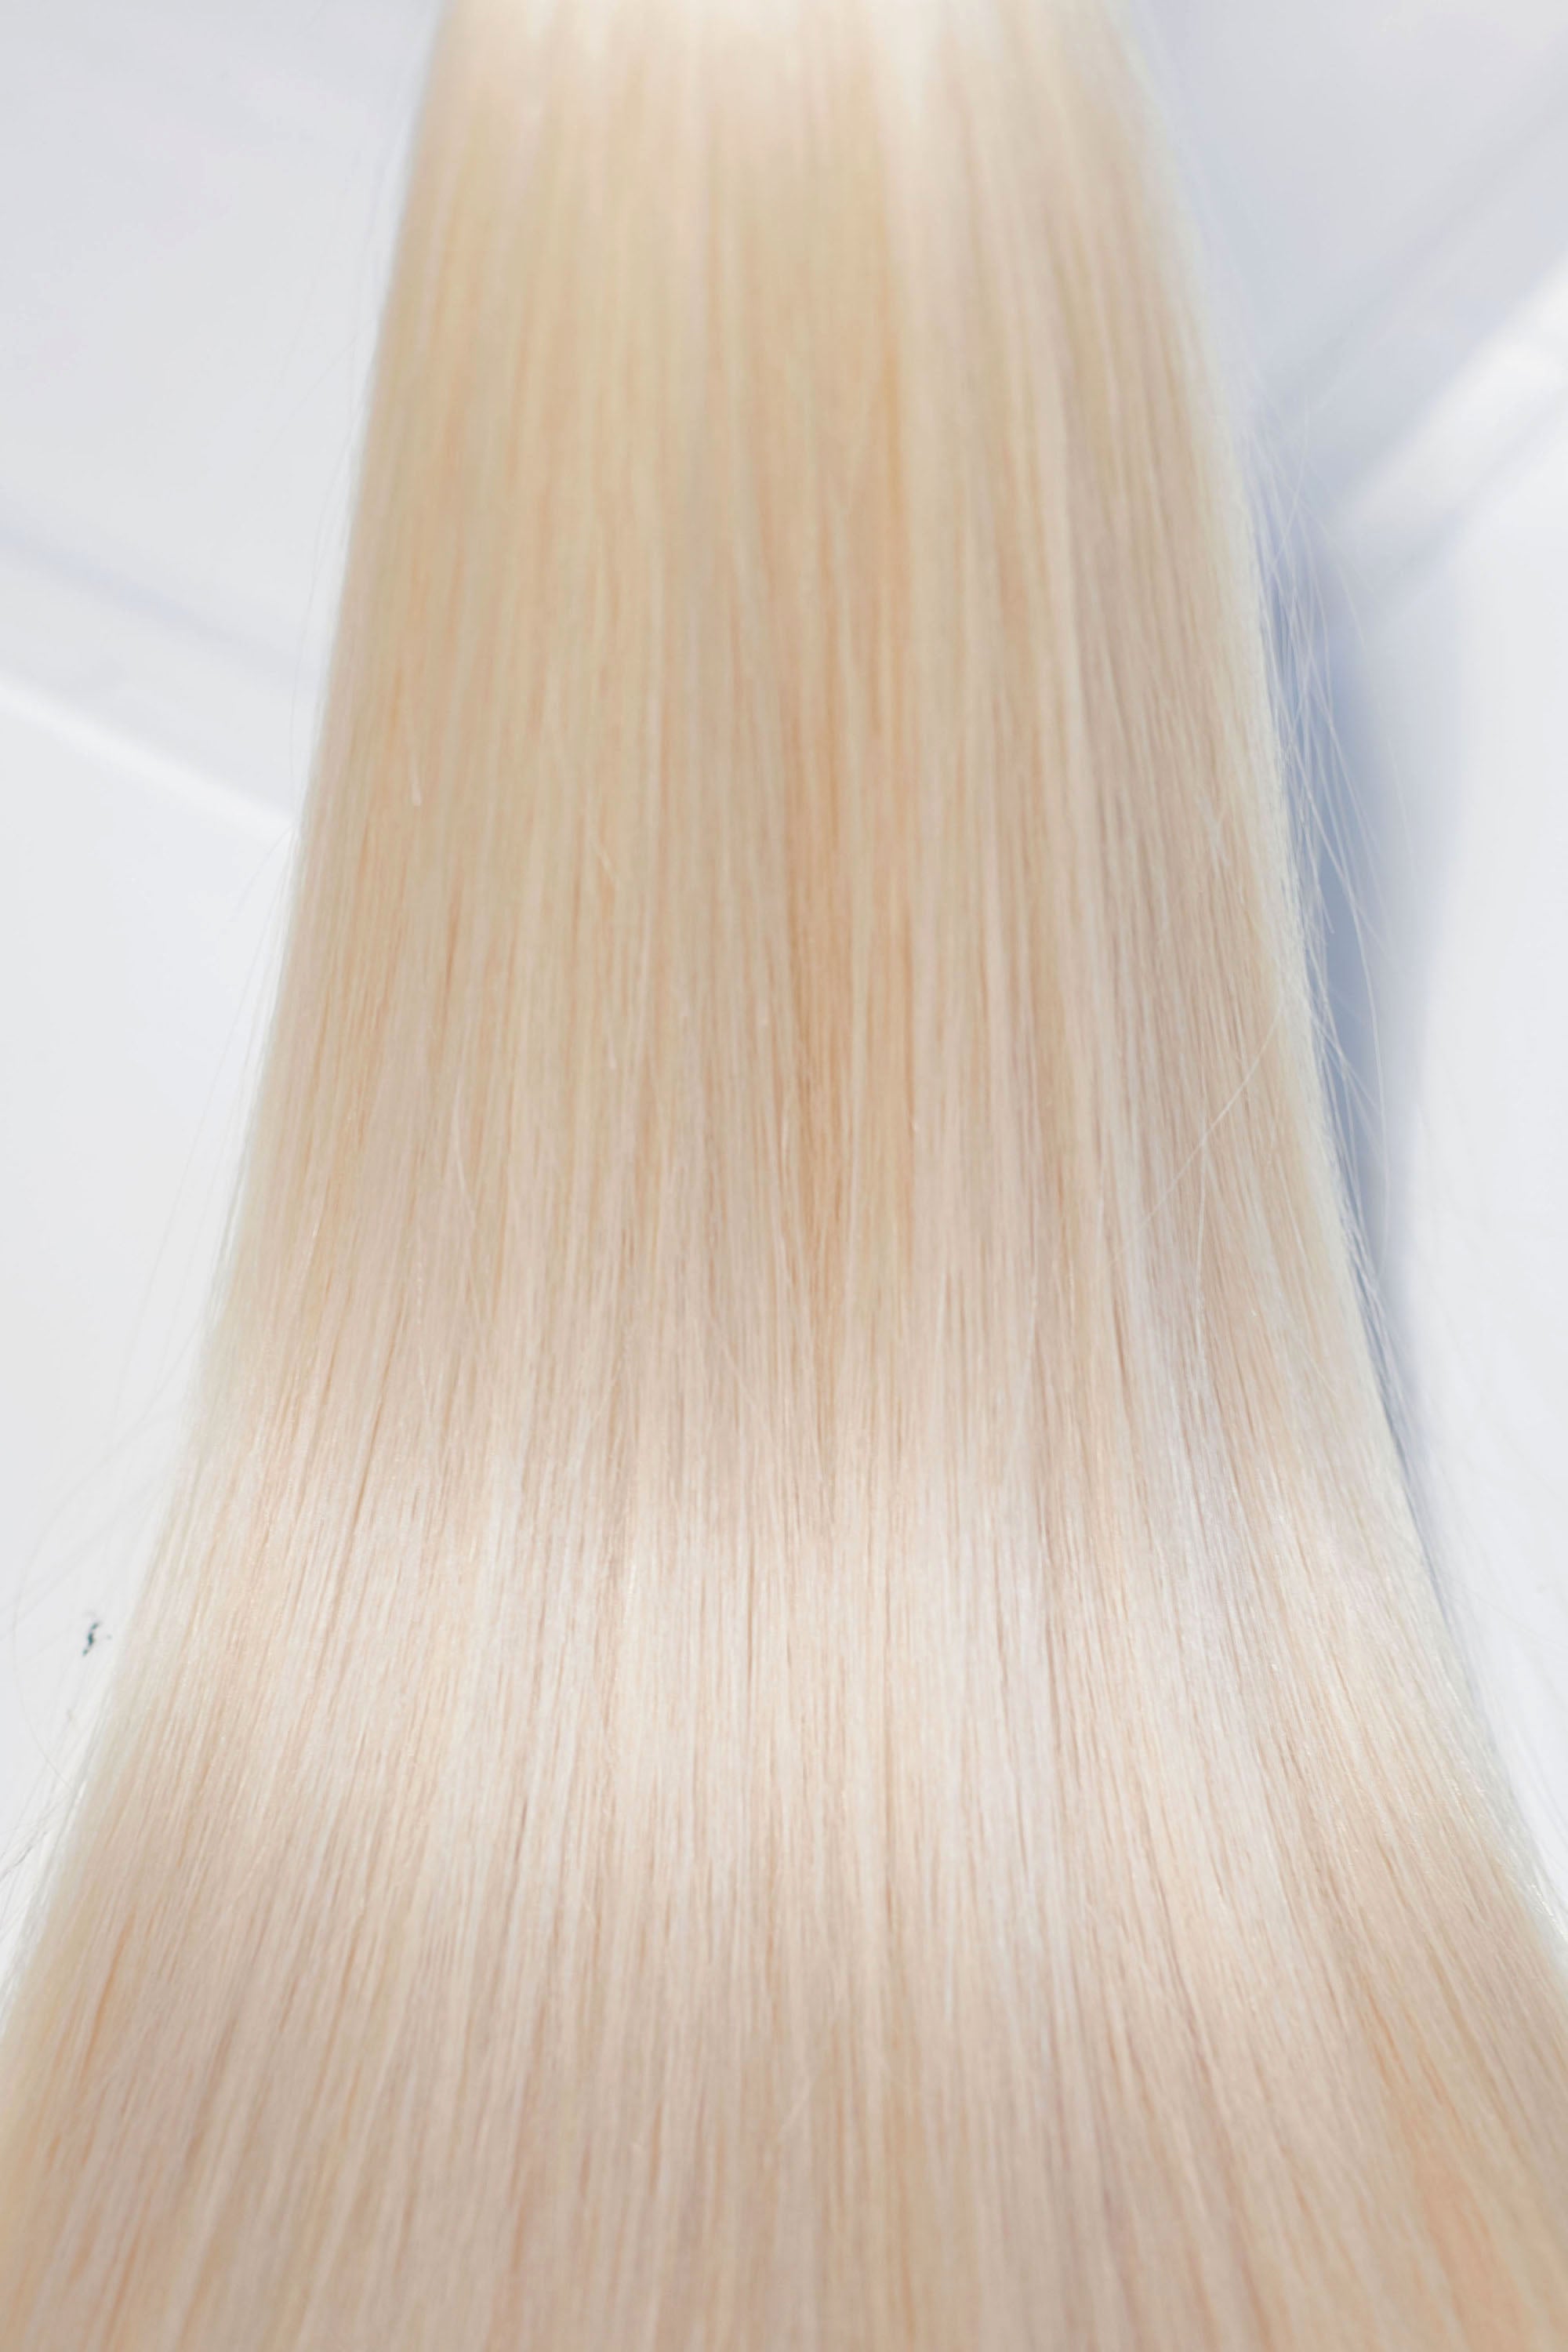 Behair professional Keratin Tip "Premium" 24" (60cm) Natural Straight Ice Blond #000 - 25g (Standart - 0.7g each pcs) hair extensions